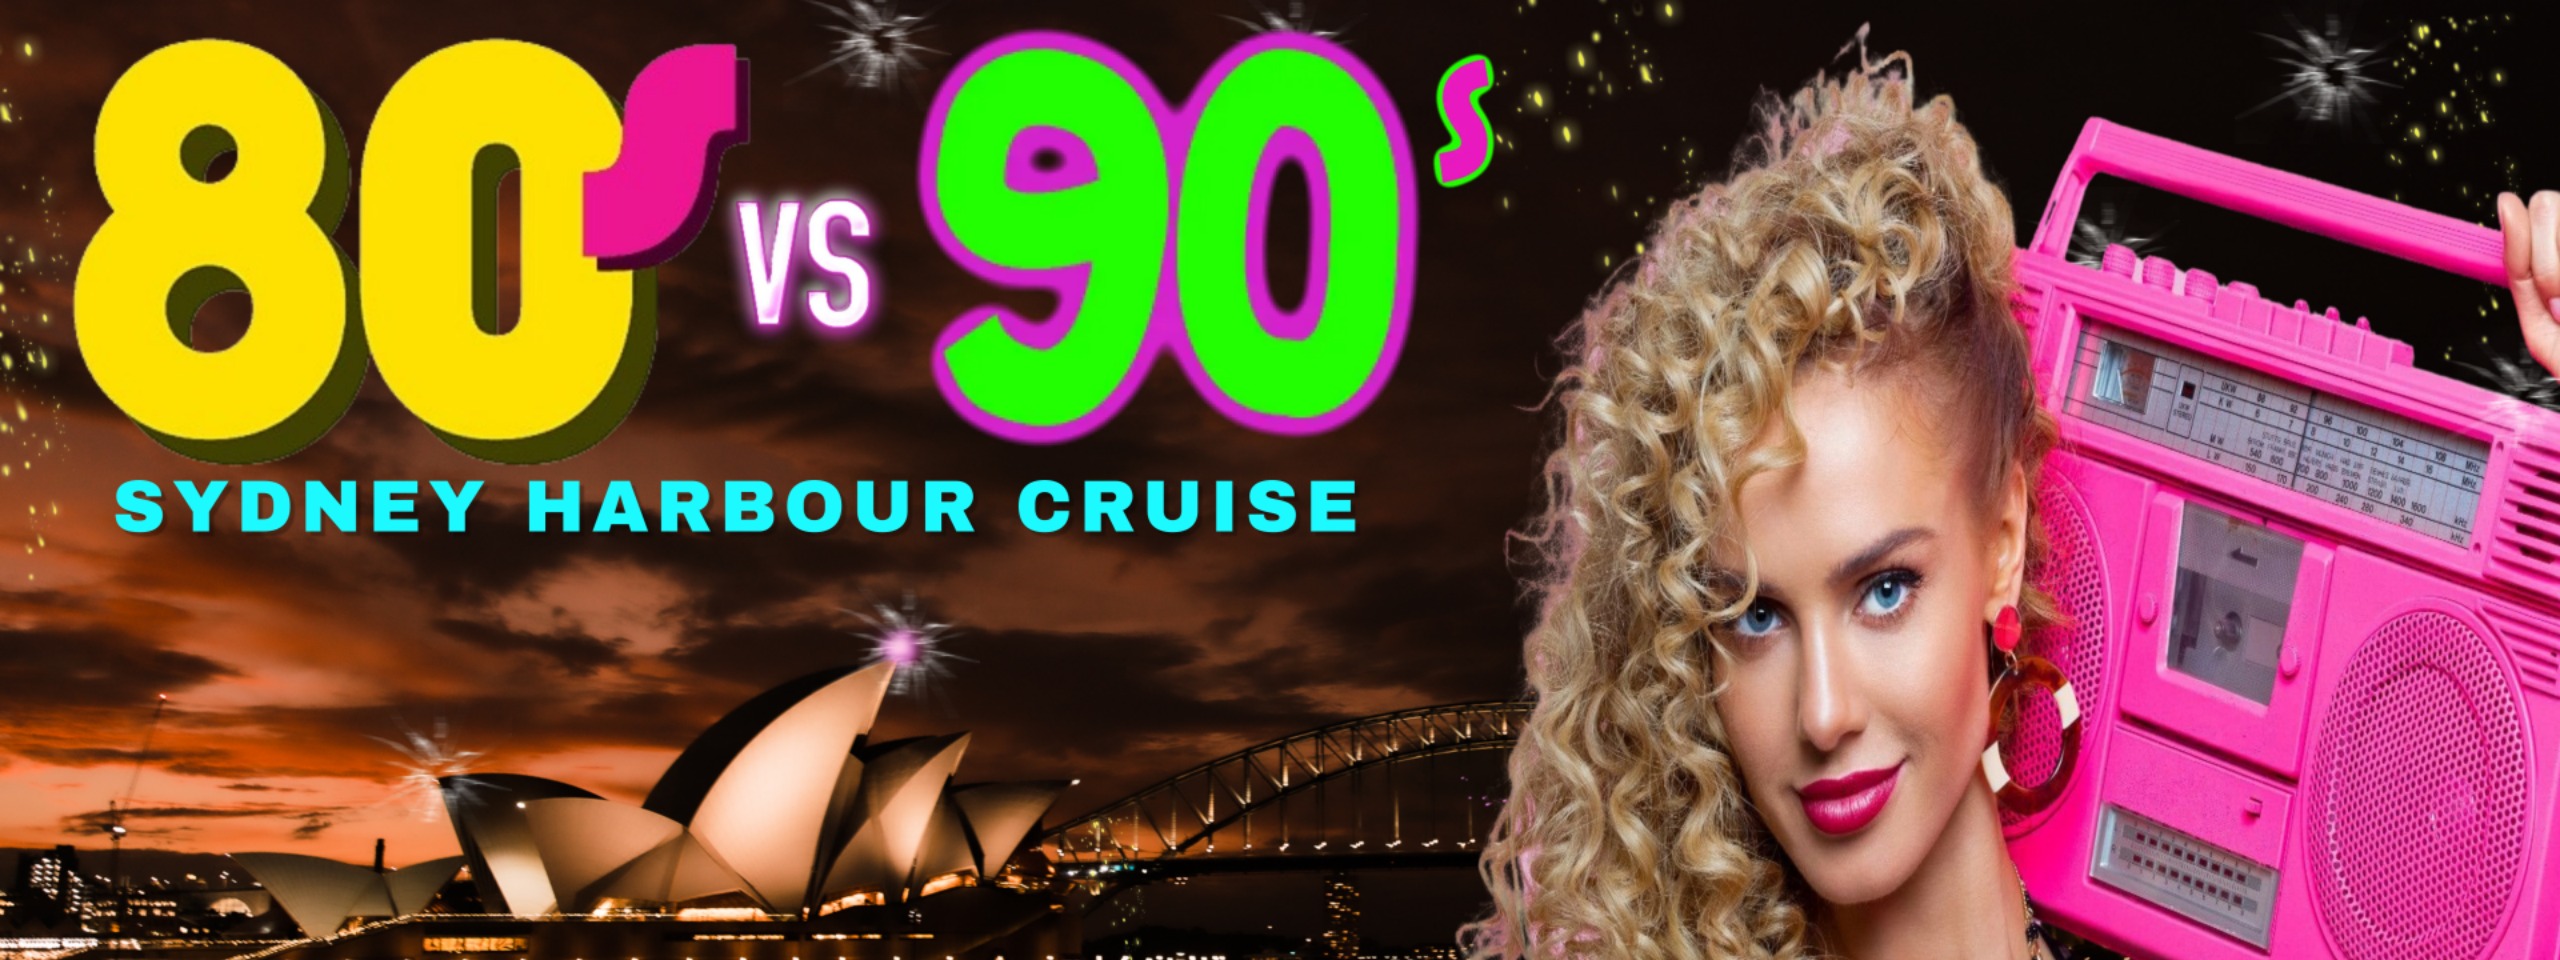 80's 90's cruise